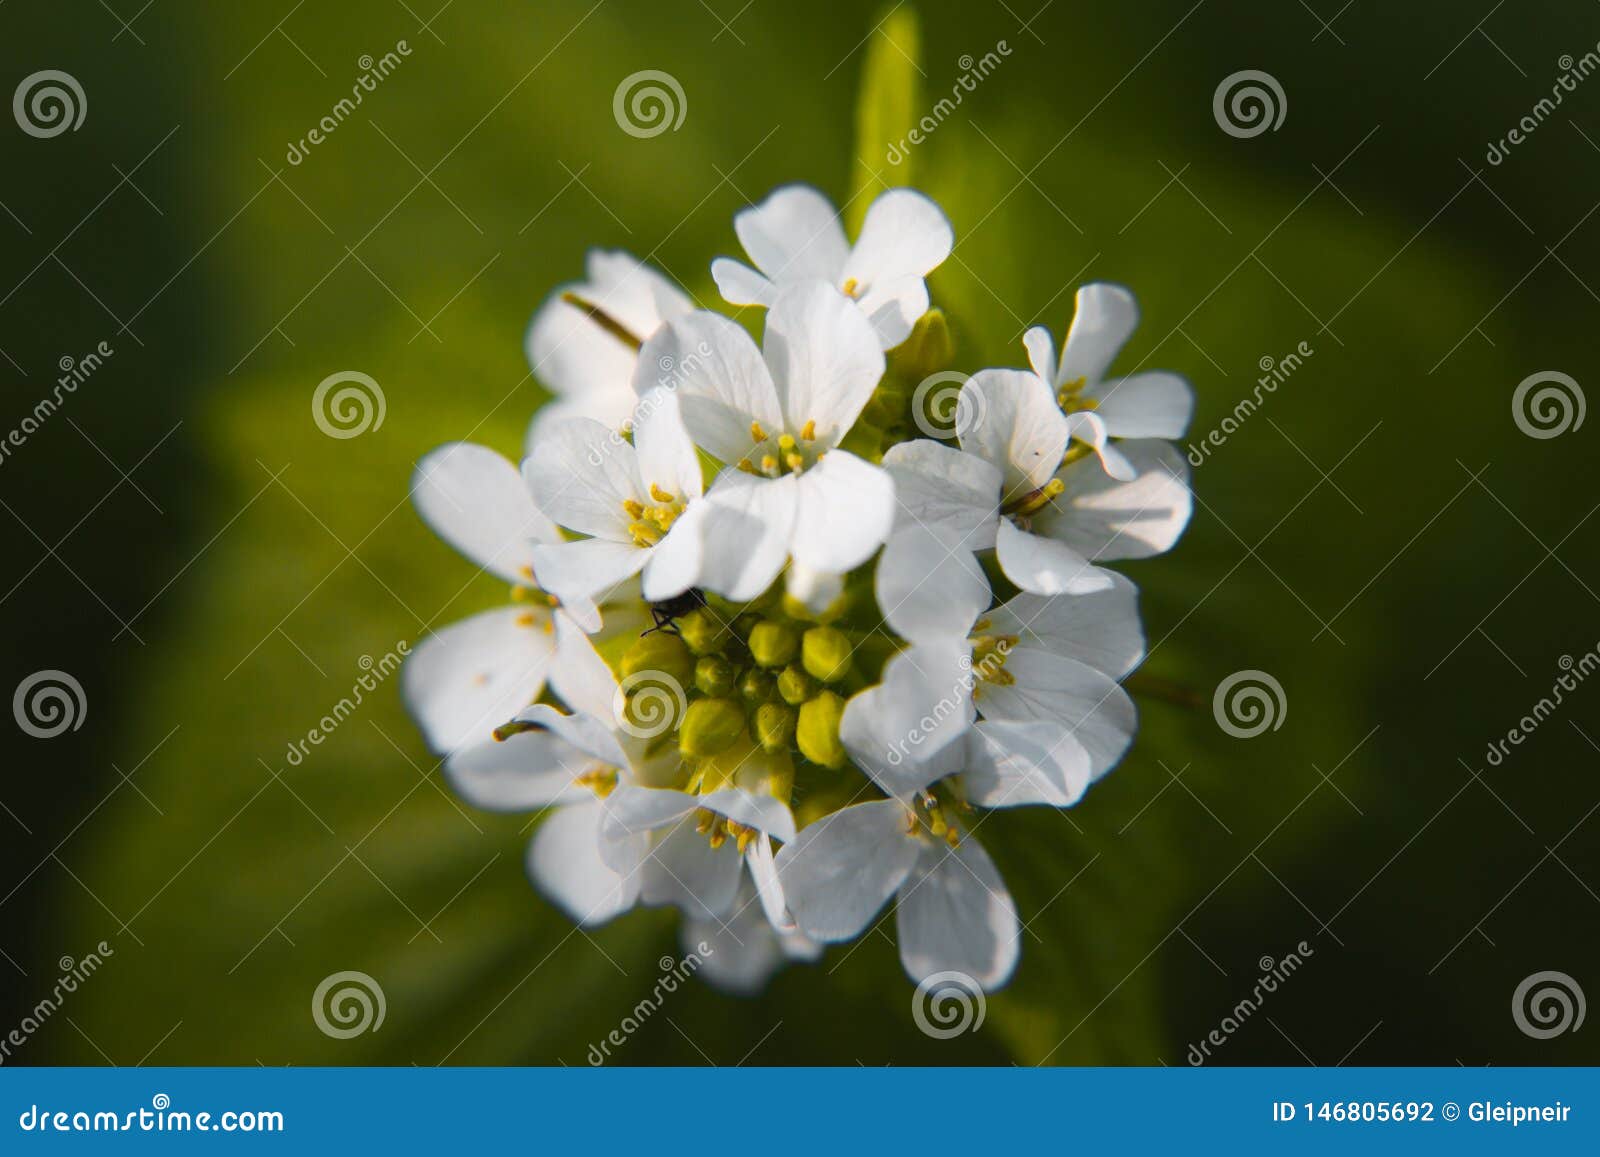 macro closeup of medicative herb blossom - garlic  mustard alliaria petiolata on blurry green background